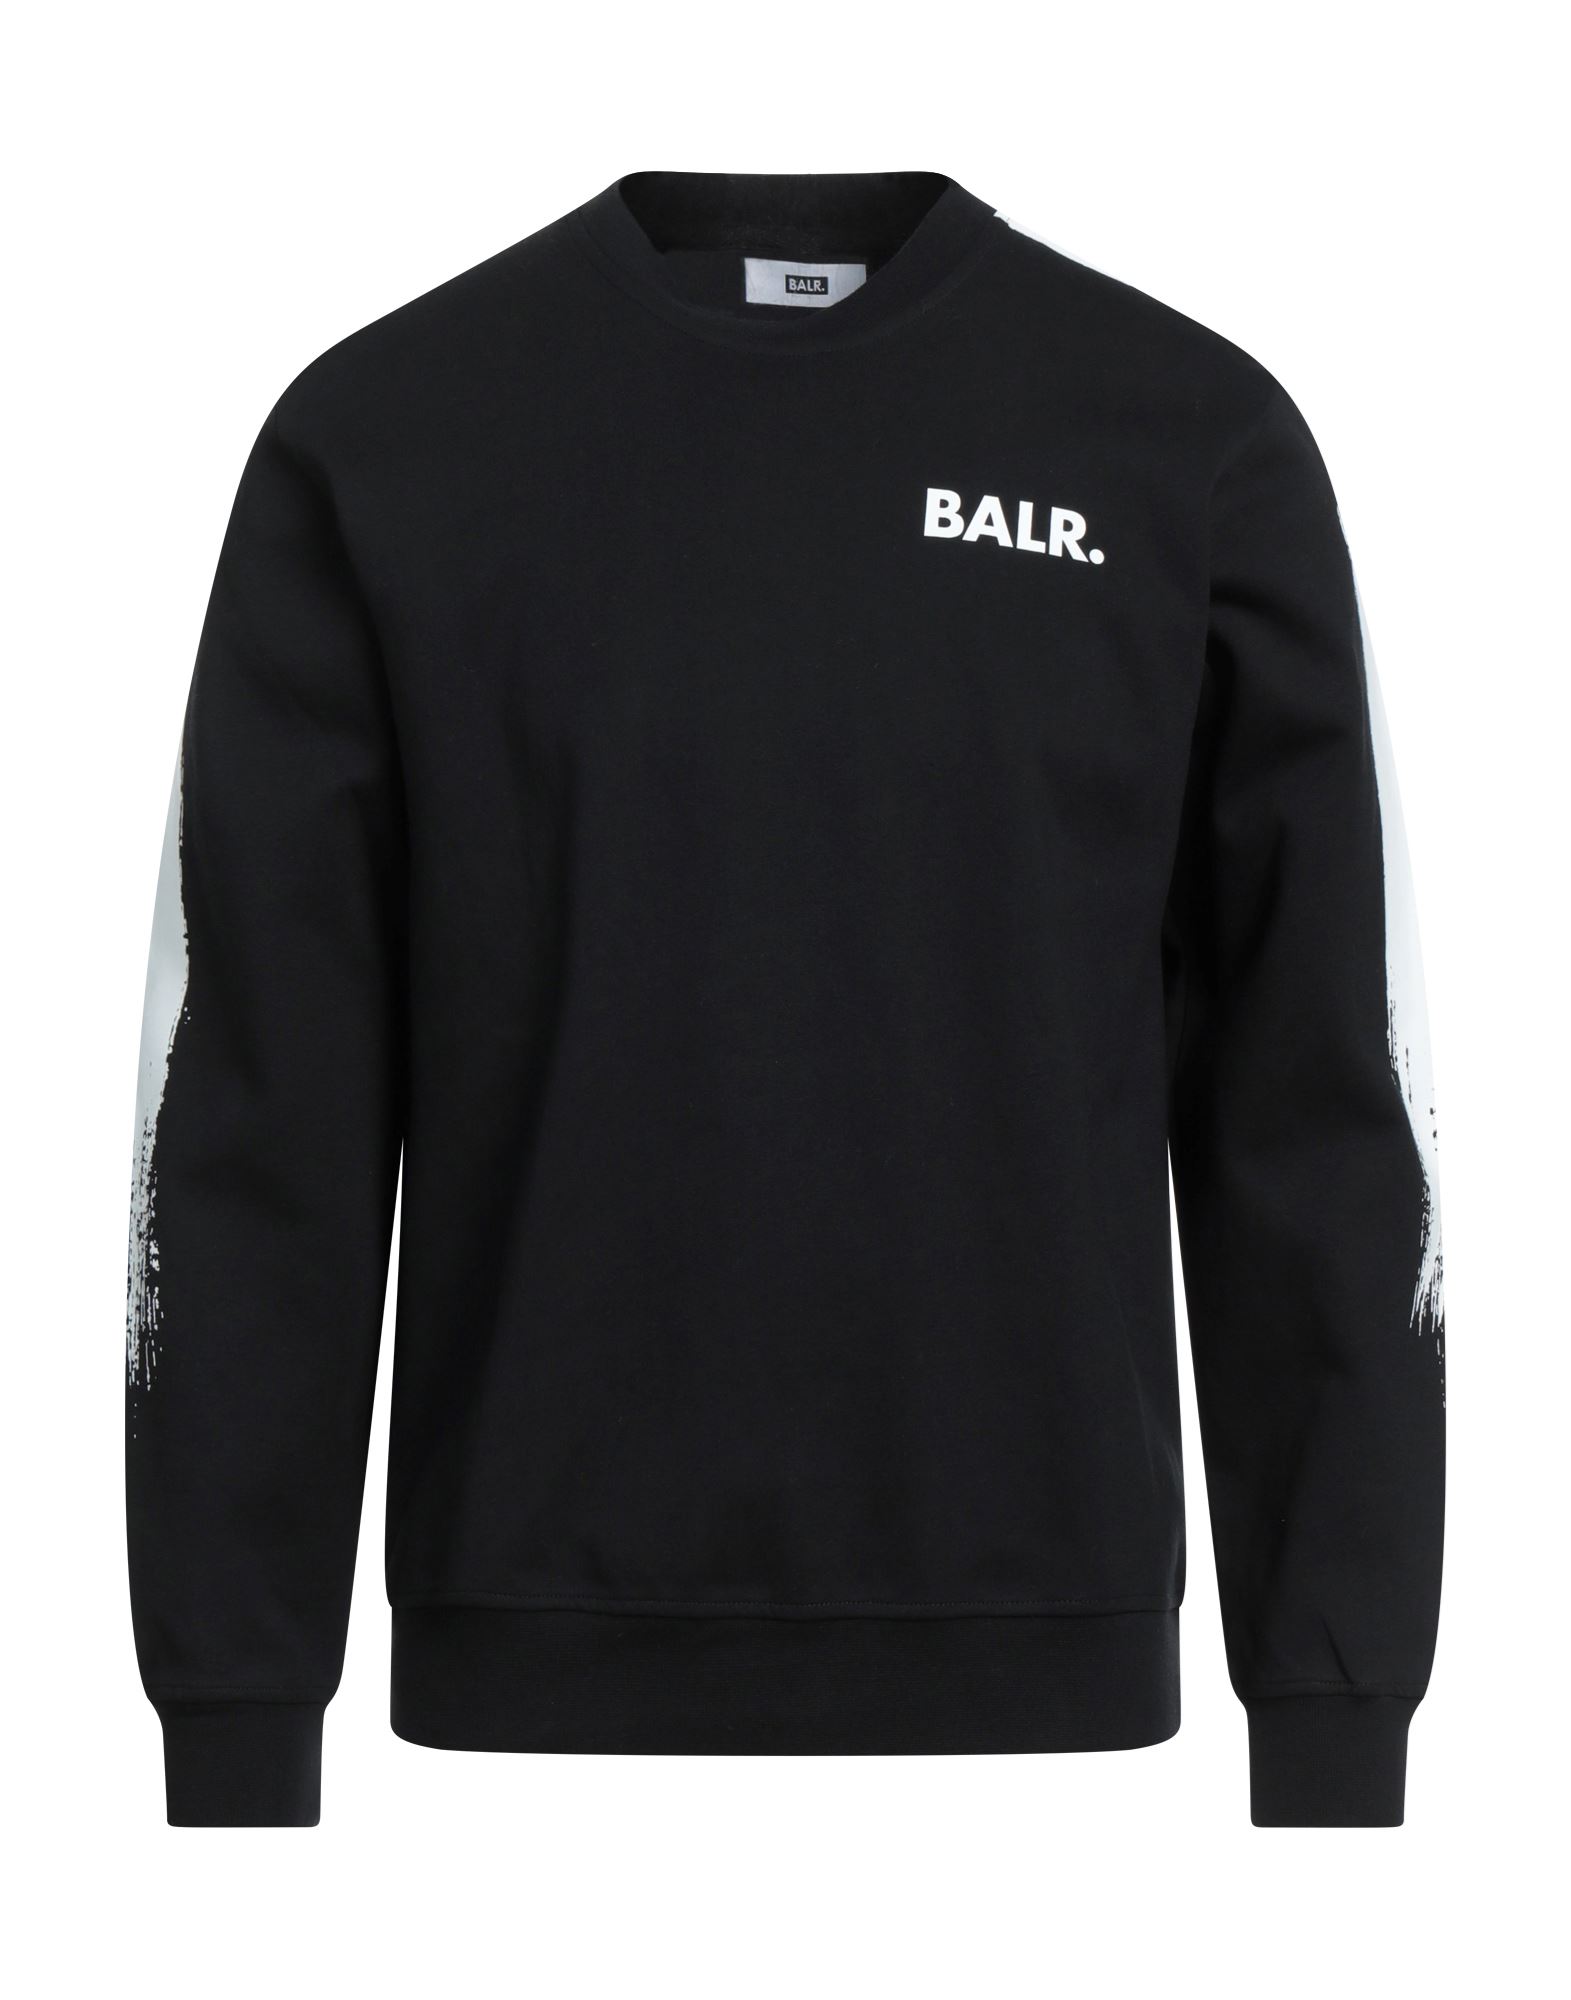 Balr. Sweatshirts In Black